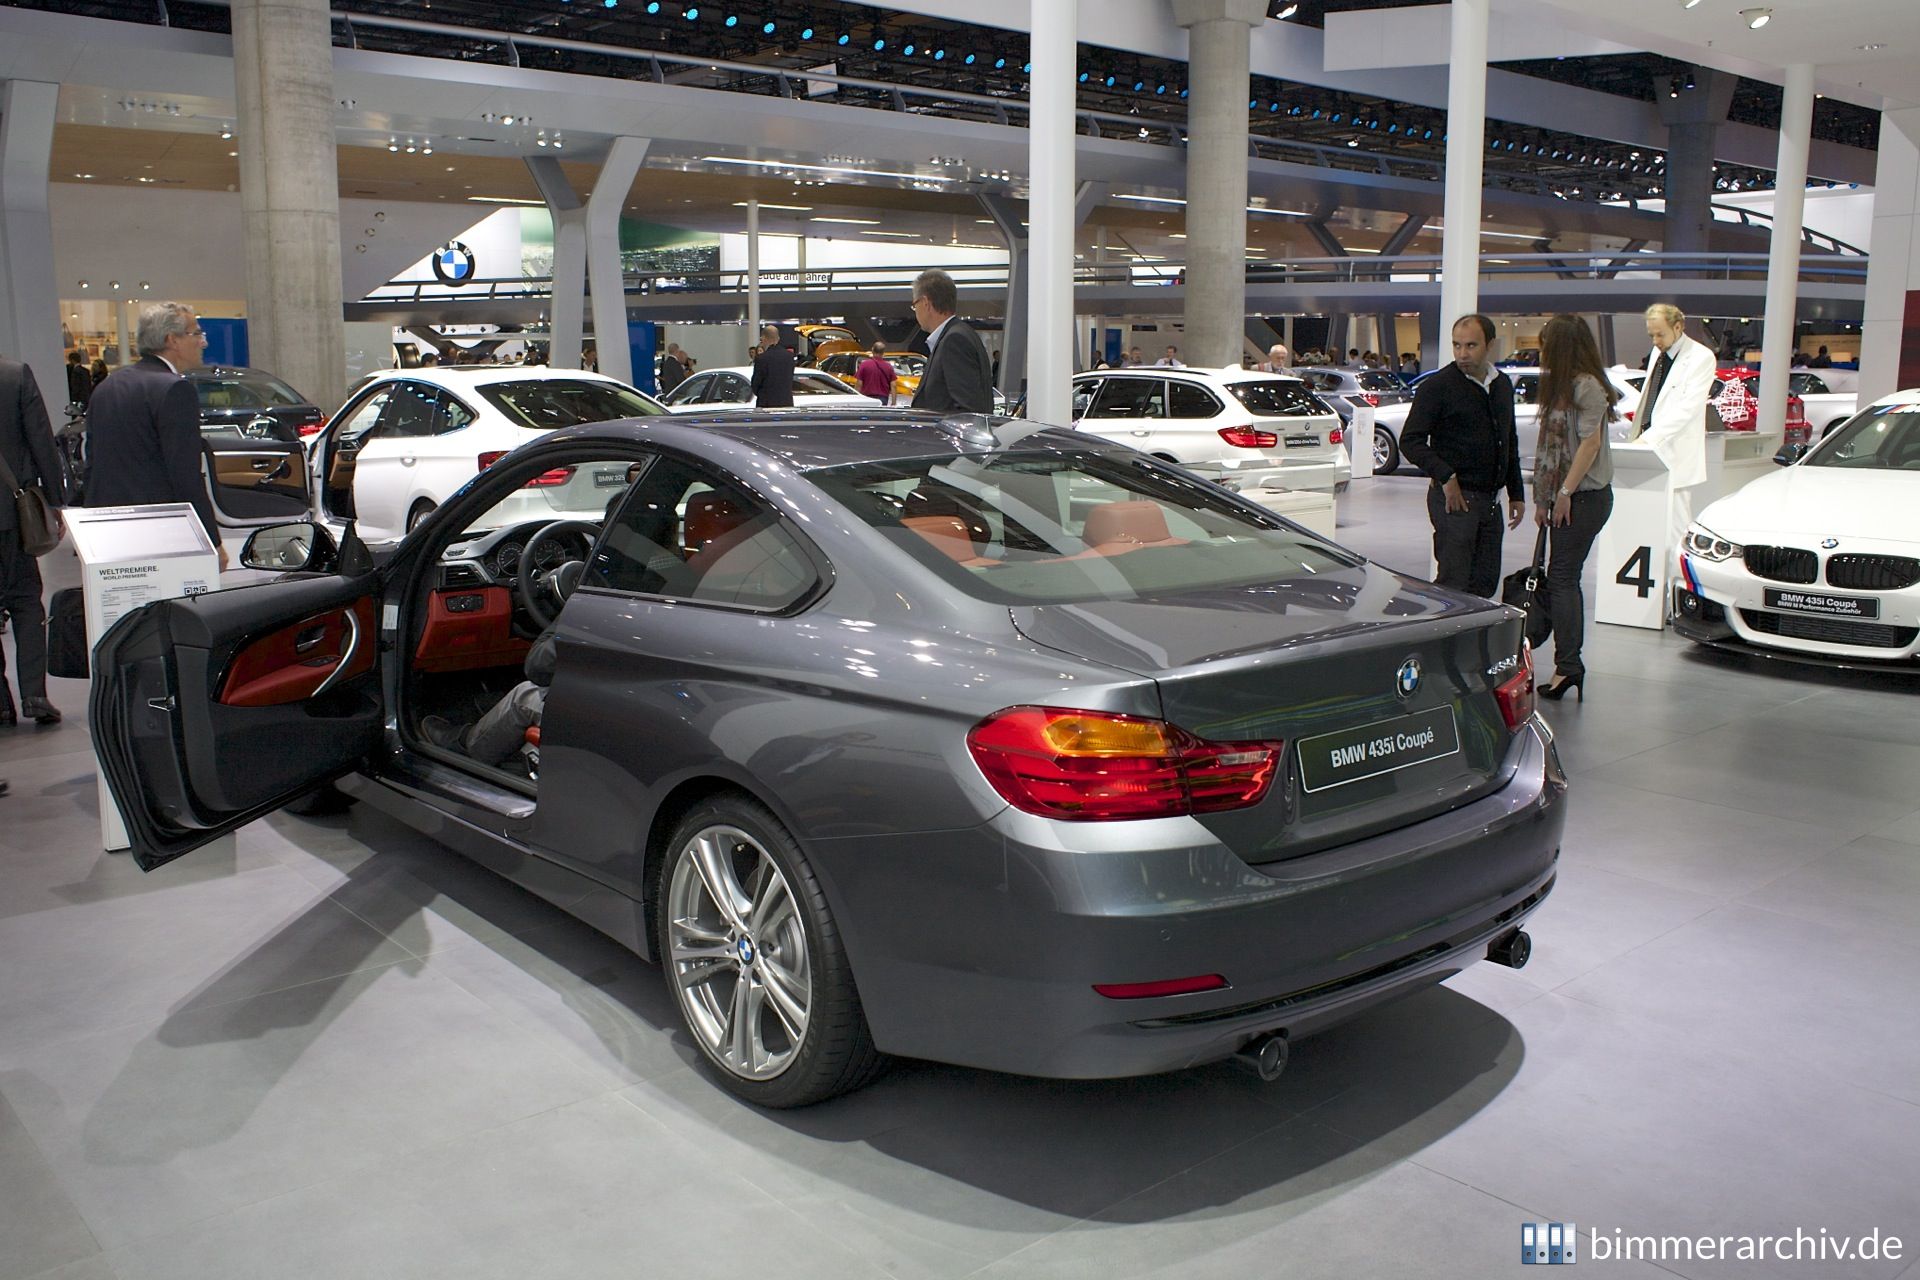 BMW 435i Coupe